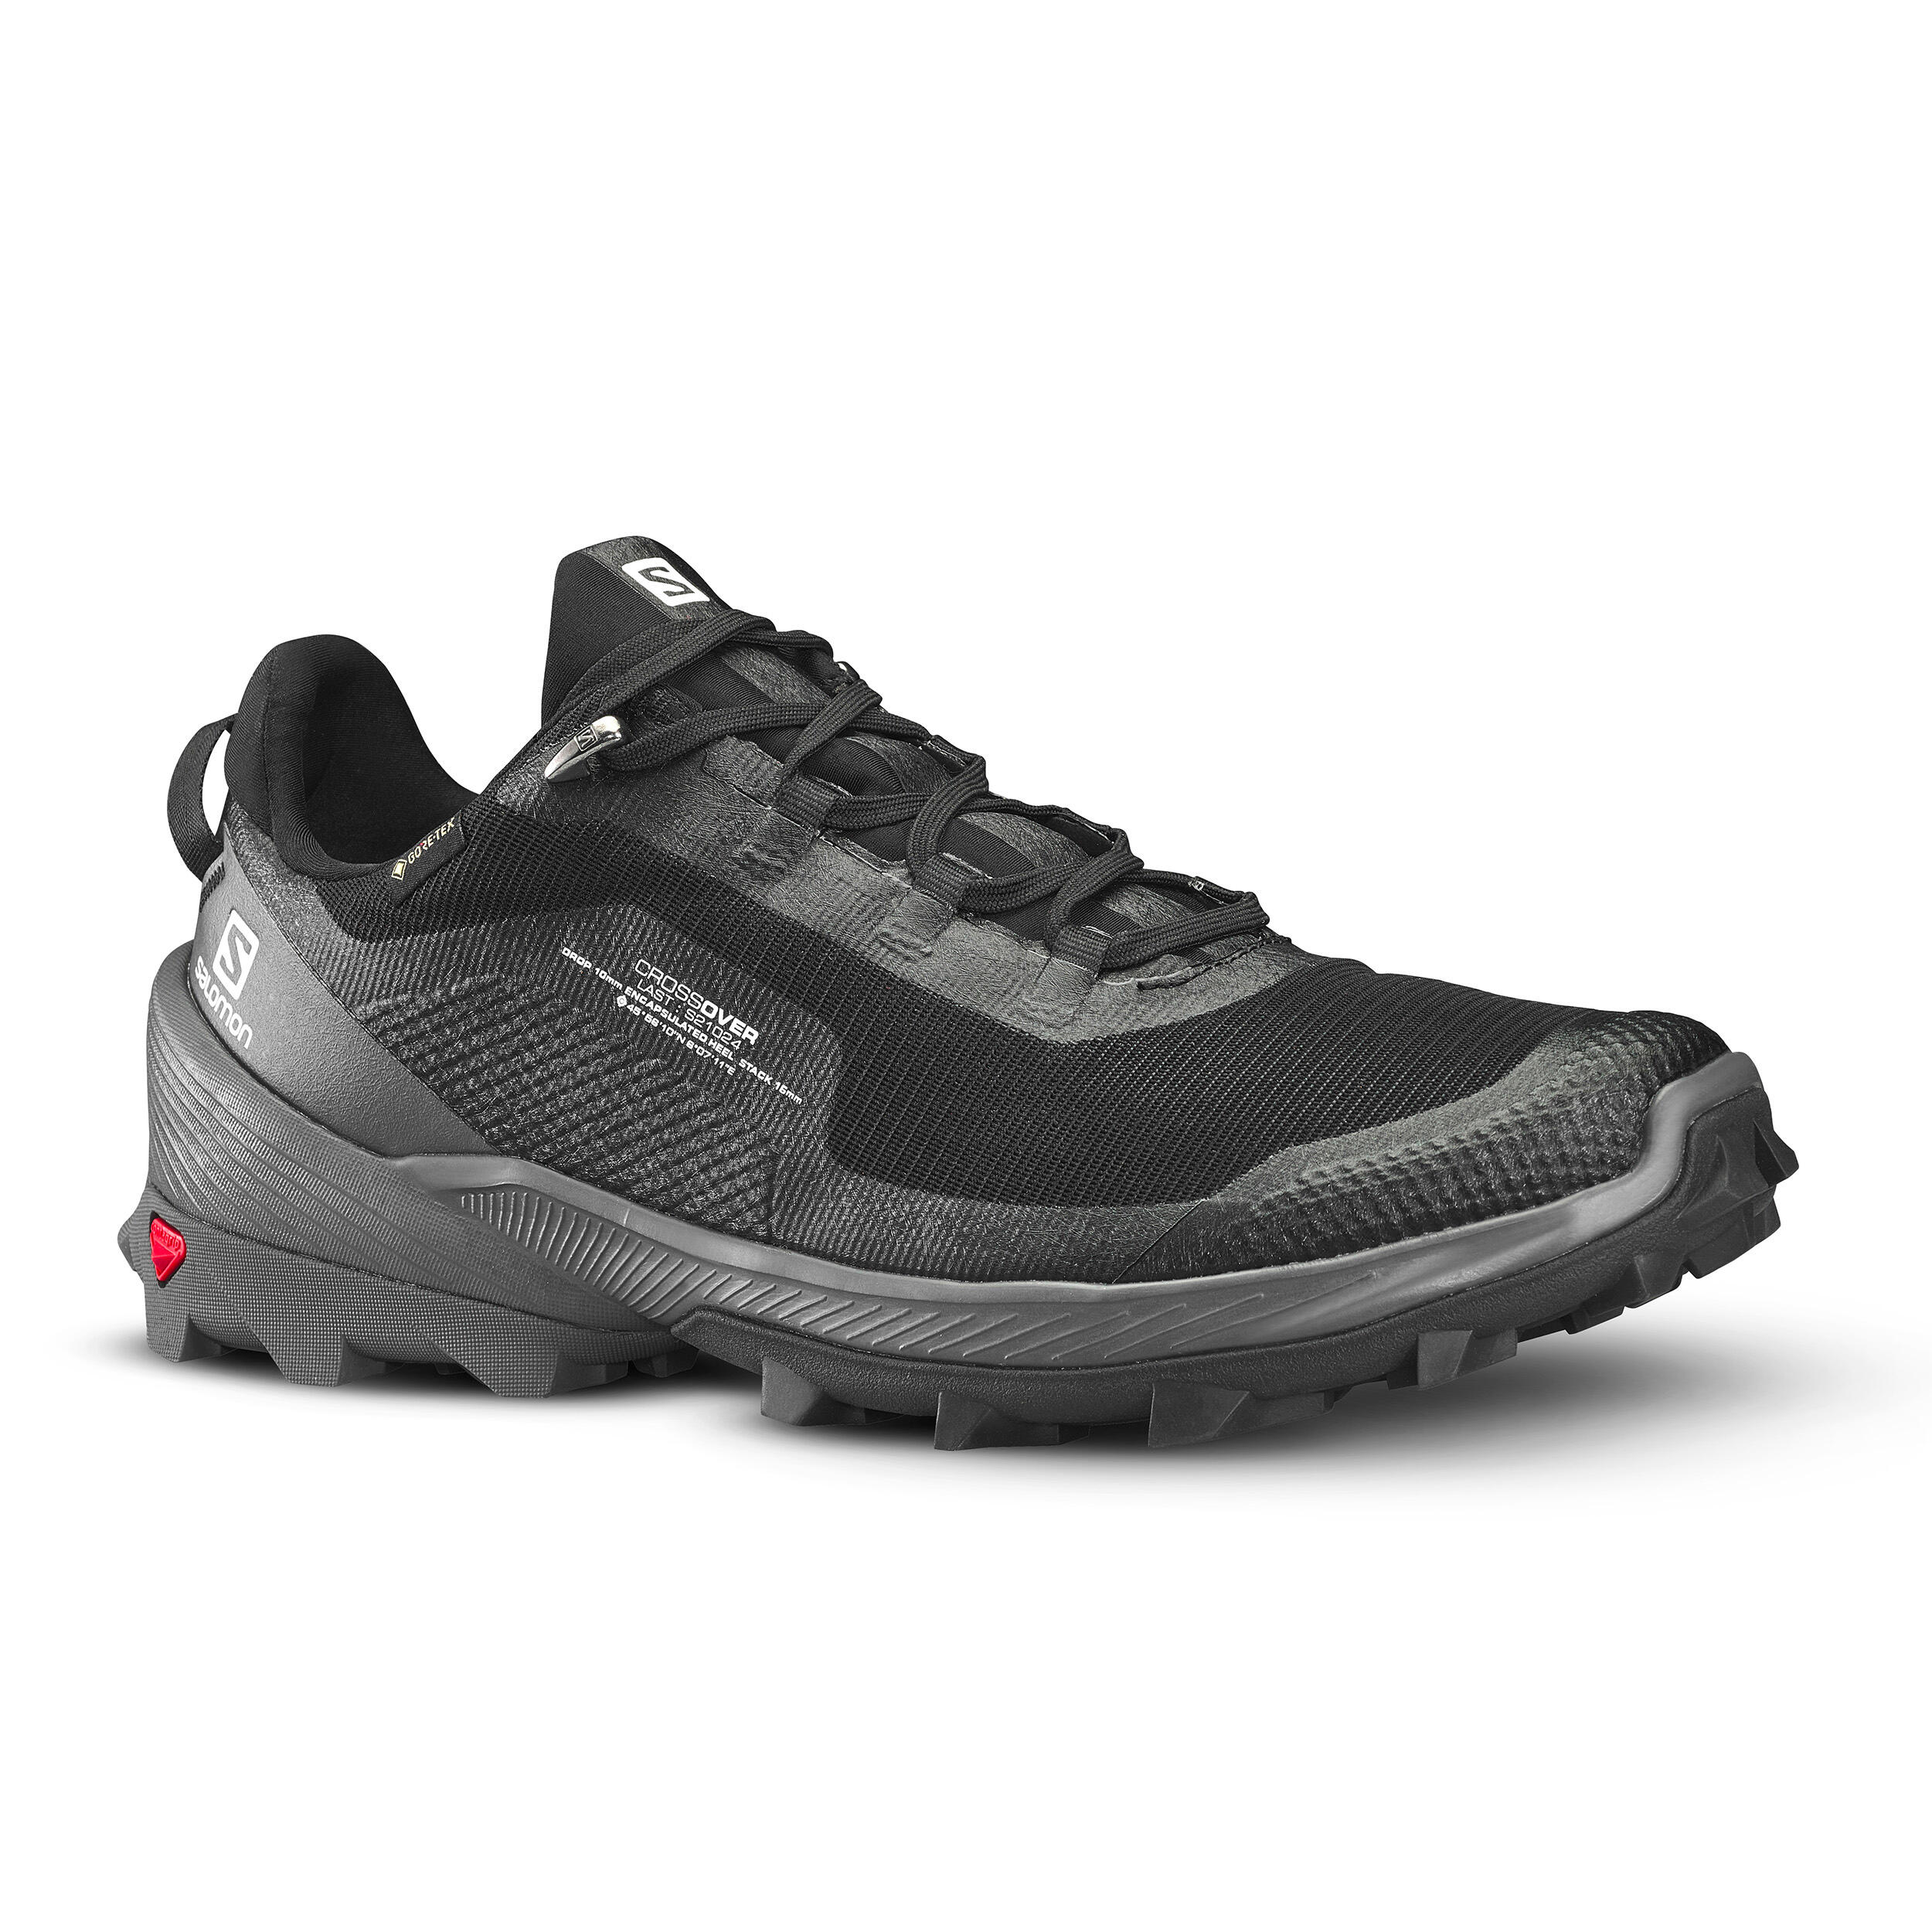 Men's waterproof walking shoes - Salomon Crossover - Black 1/5